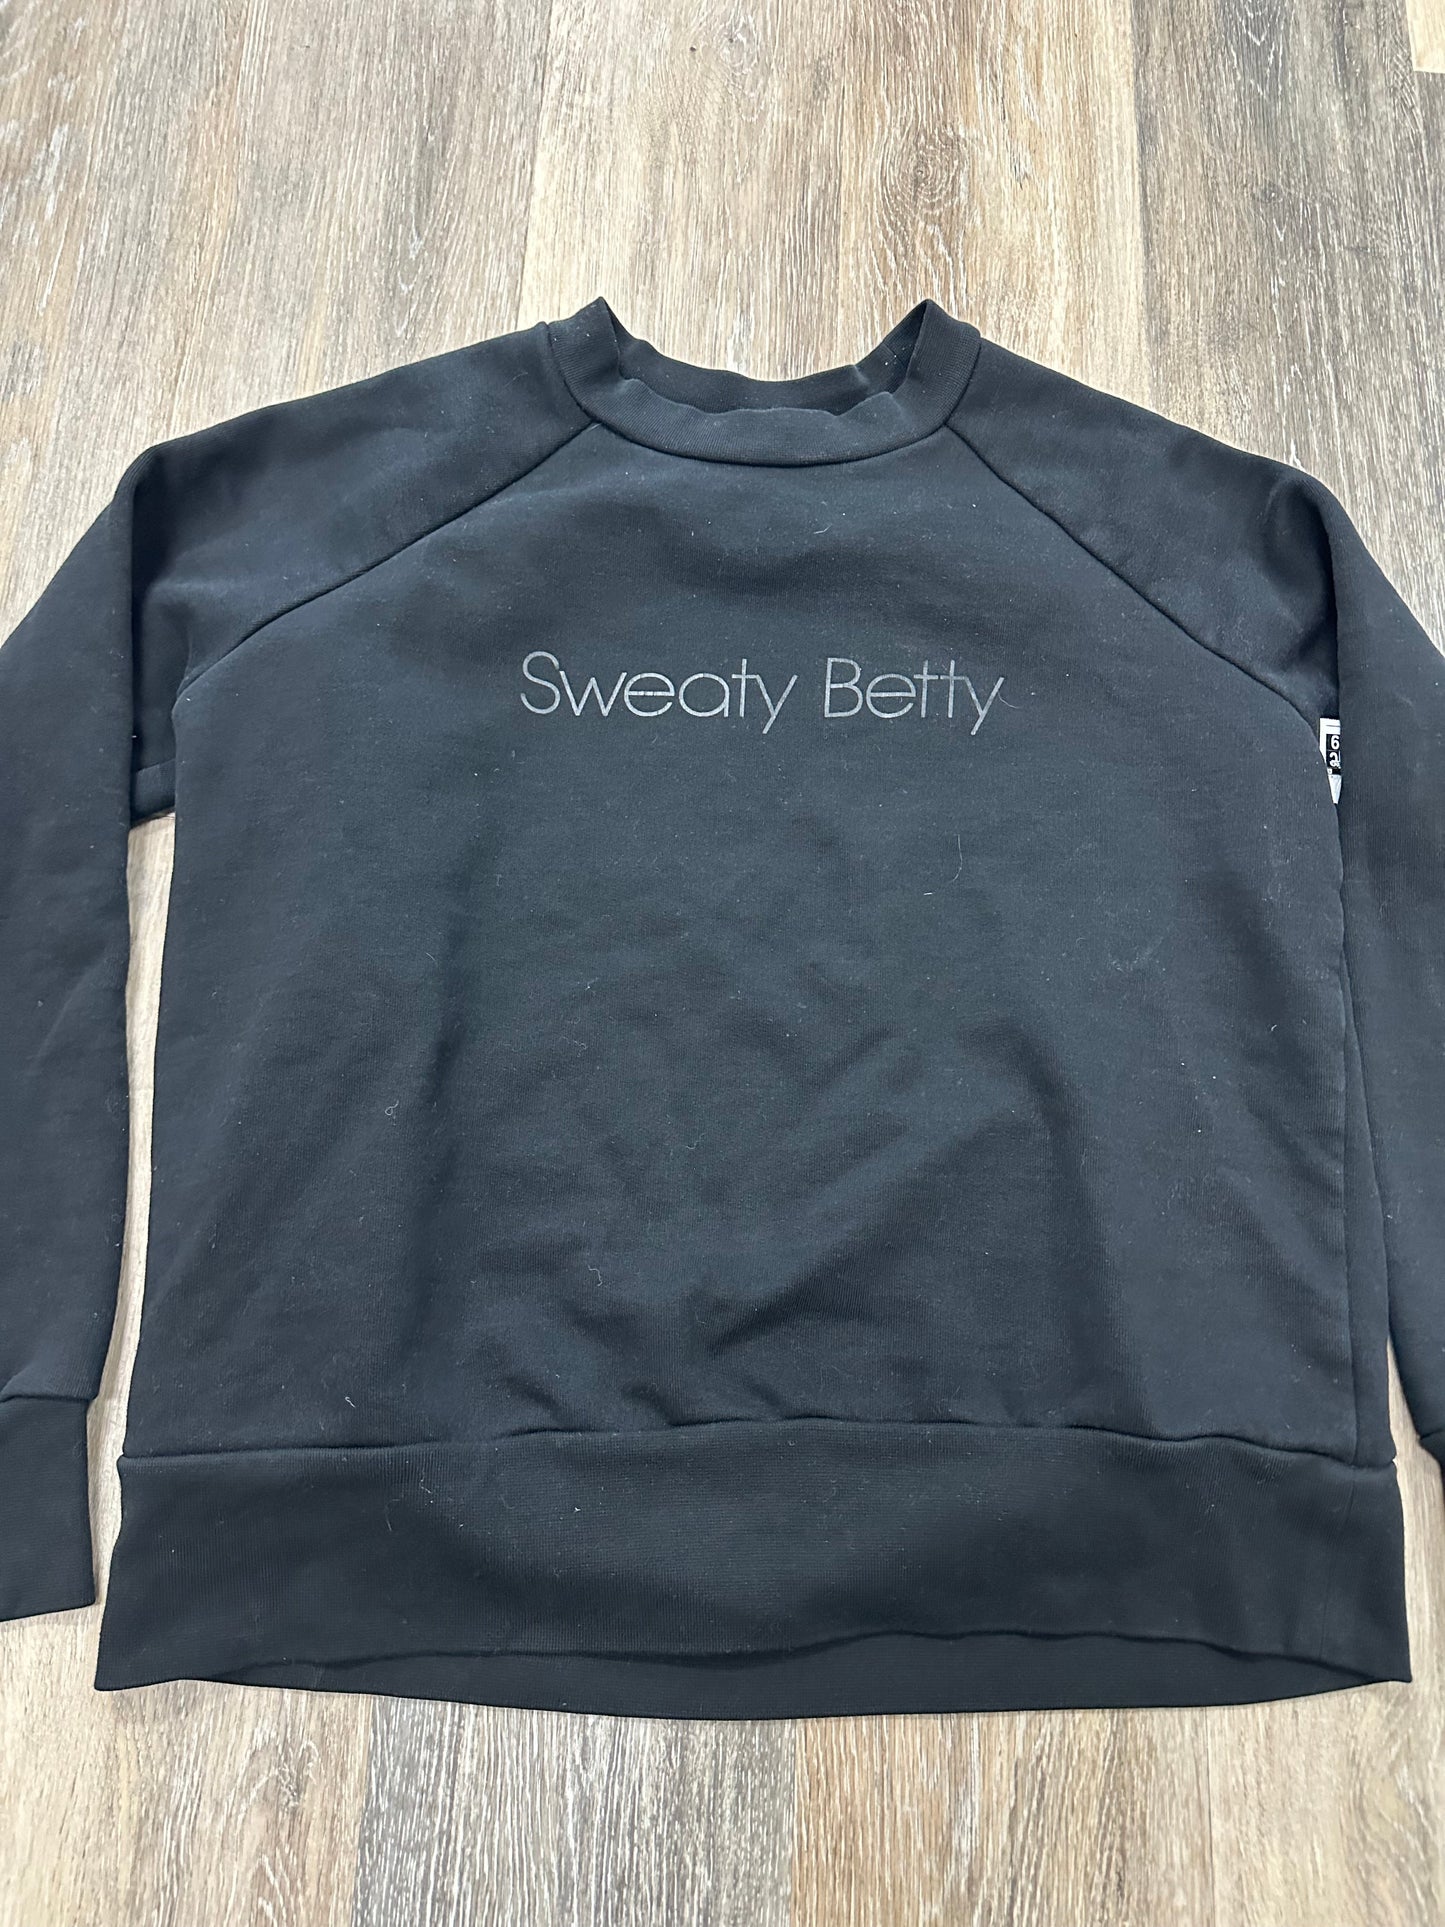 Athletic Sweatshirt Crewneck By Sweaty Betty  Size: S